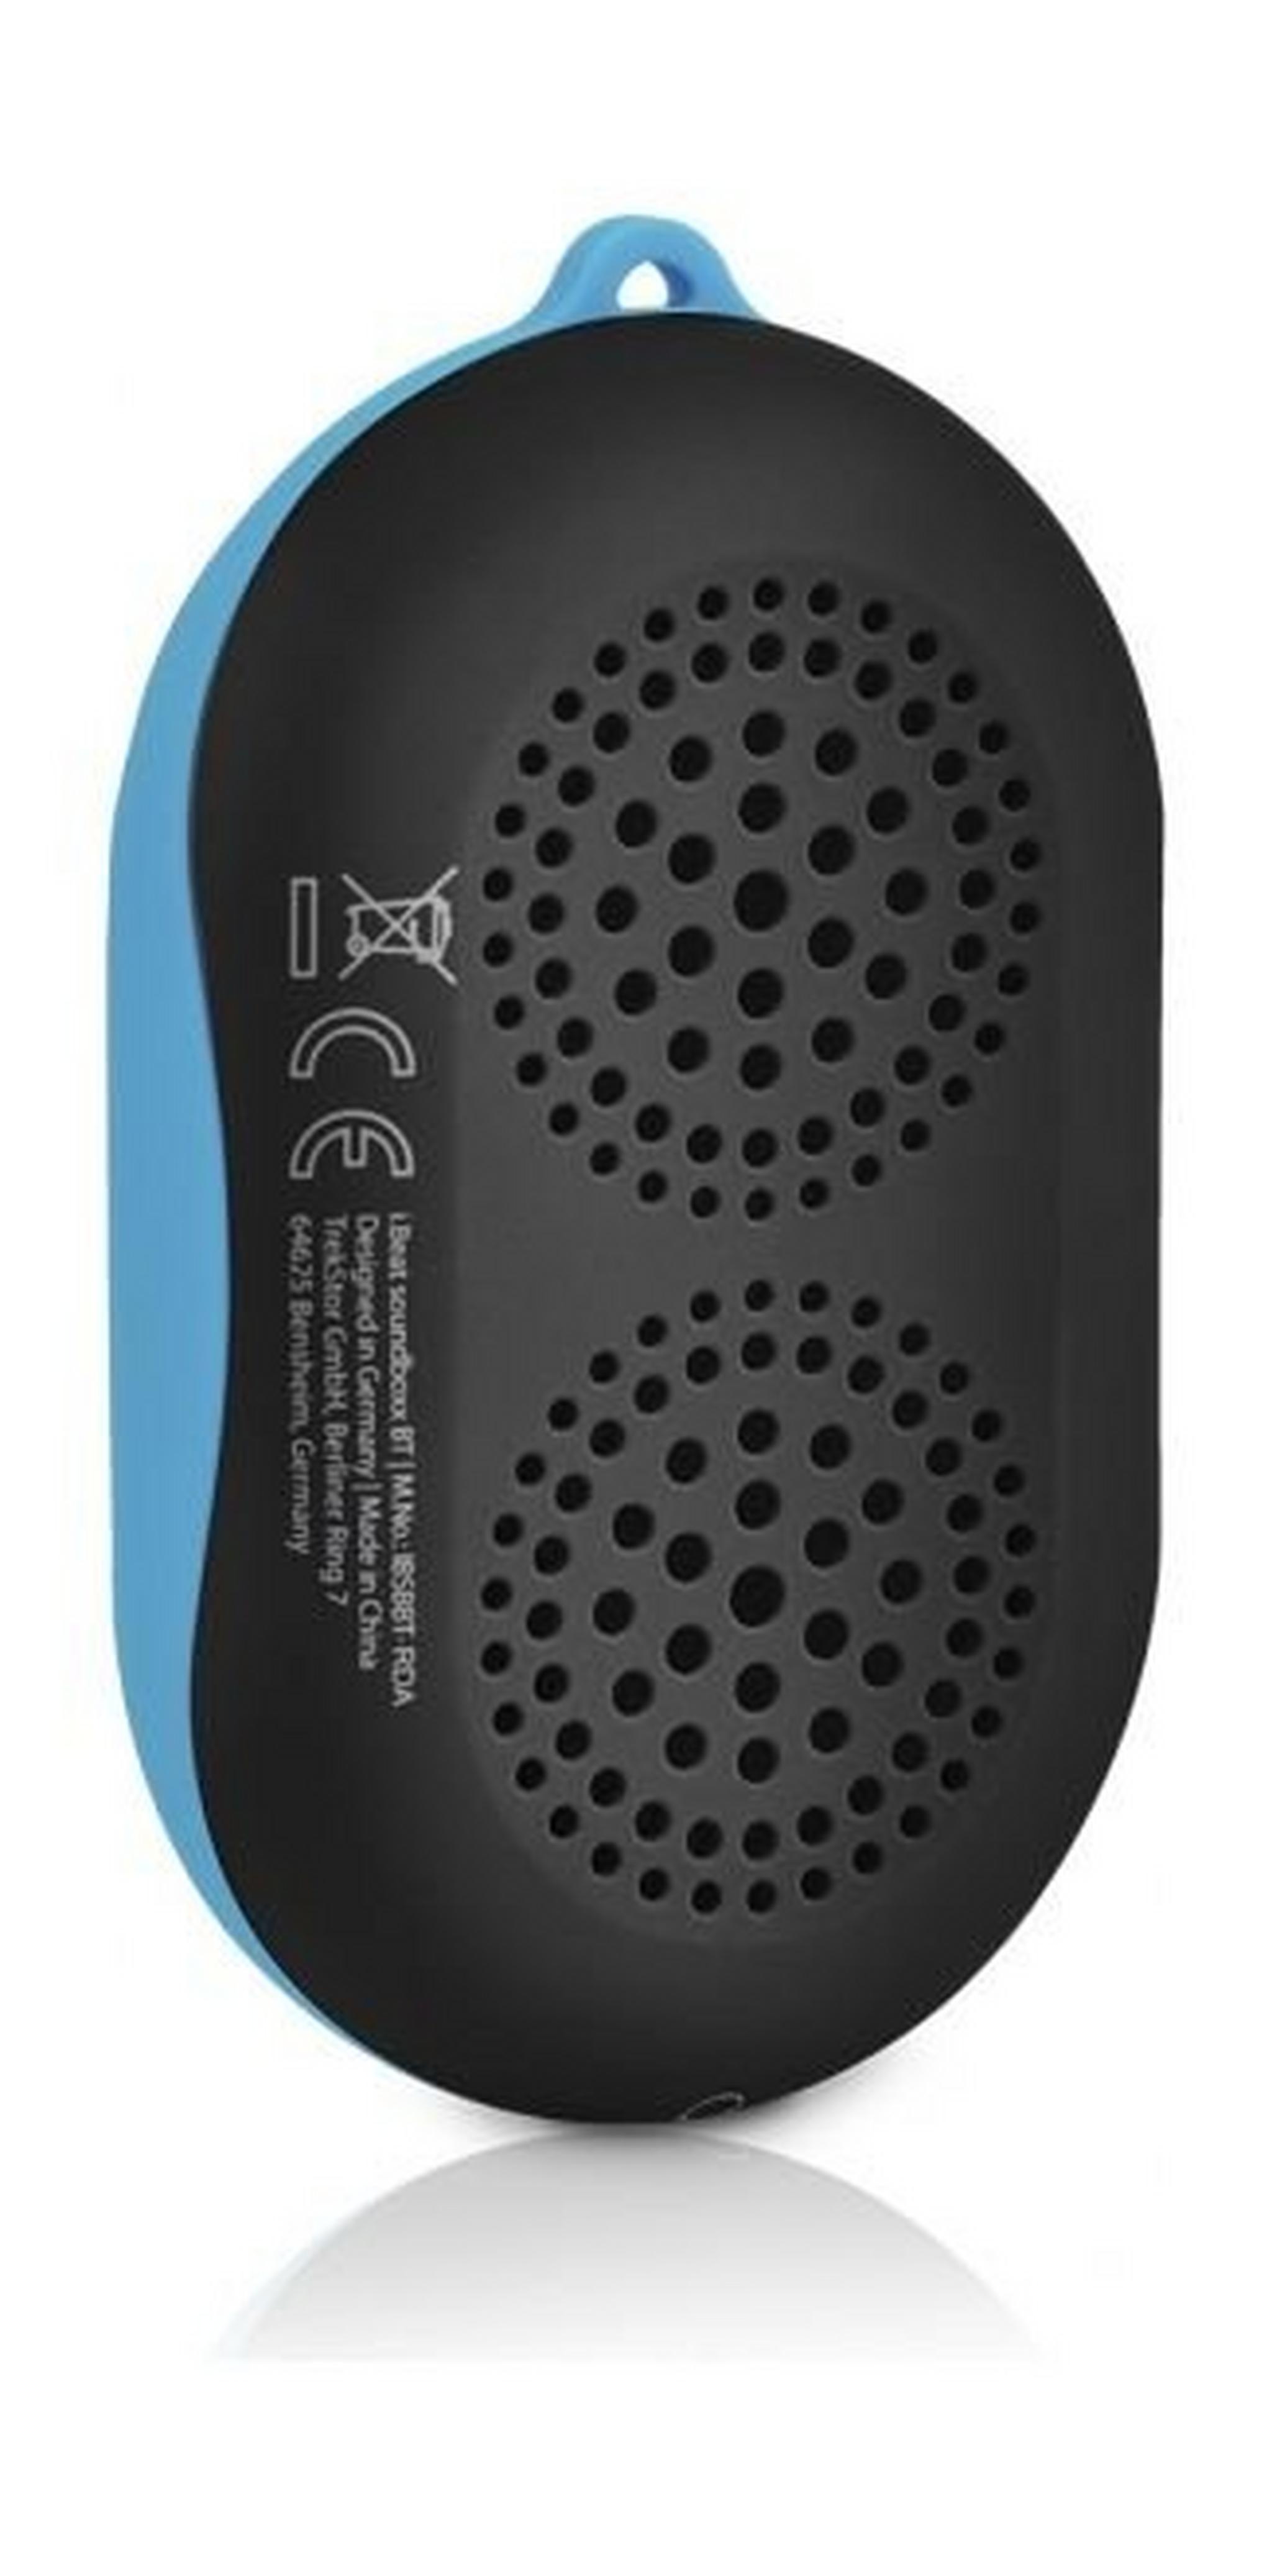 Trekstor I.Beat Soundbox Bluetooth MP3 Player – Blue/Black